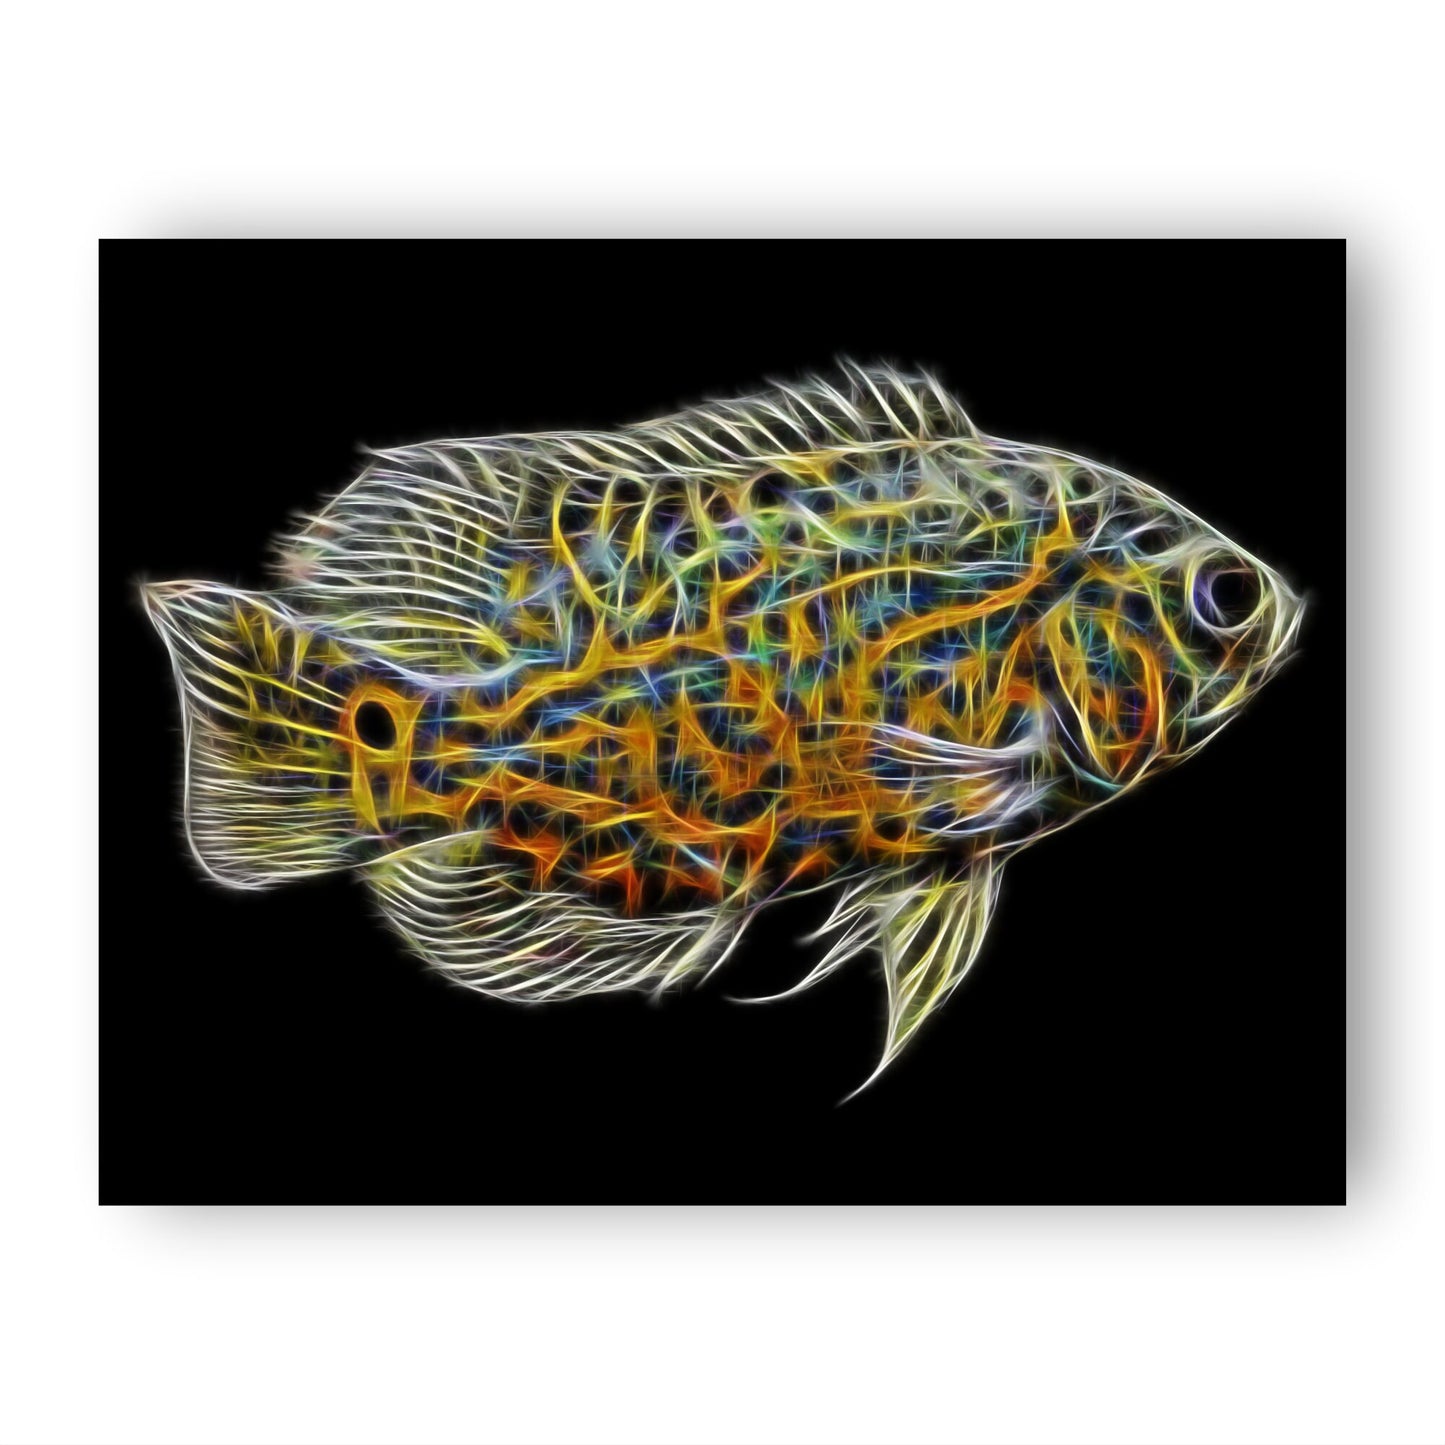 Lemon Tiger Oscar Fish Print with Stunning Fractal Art Design.